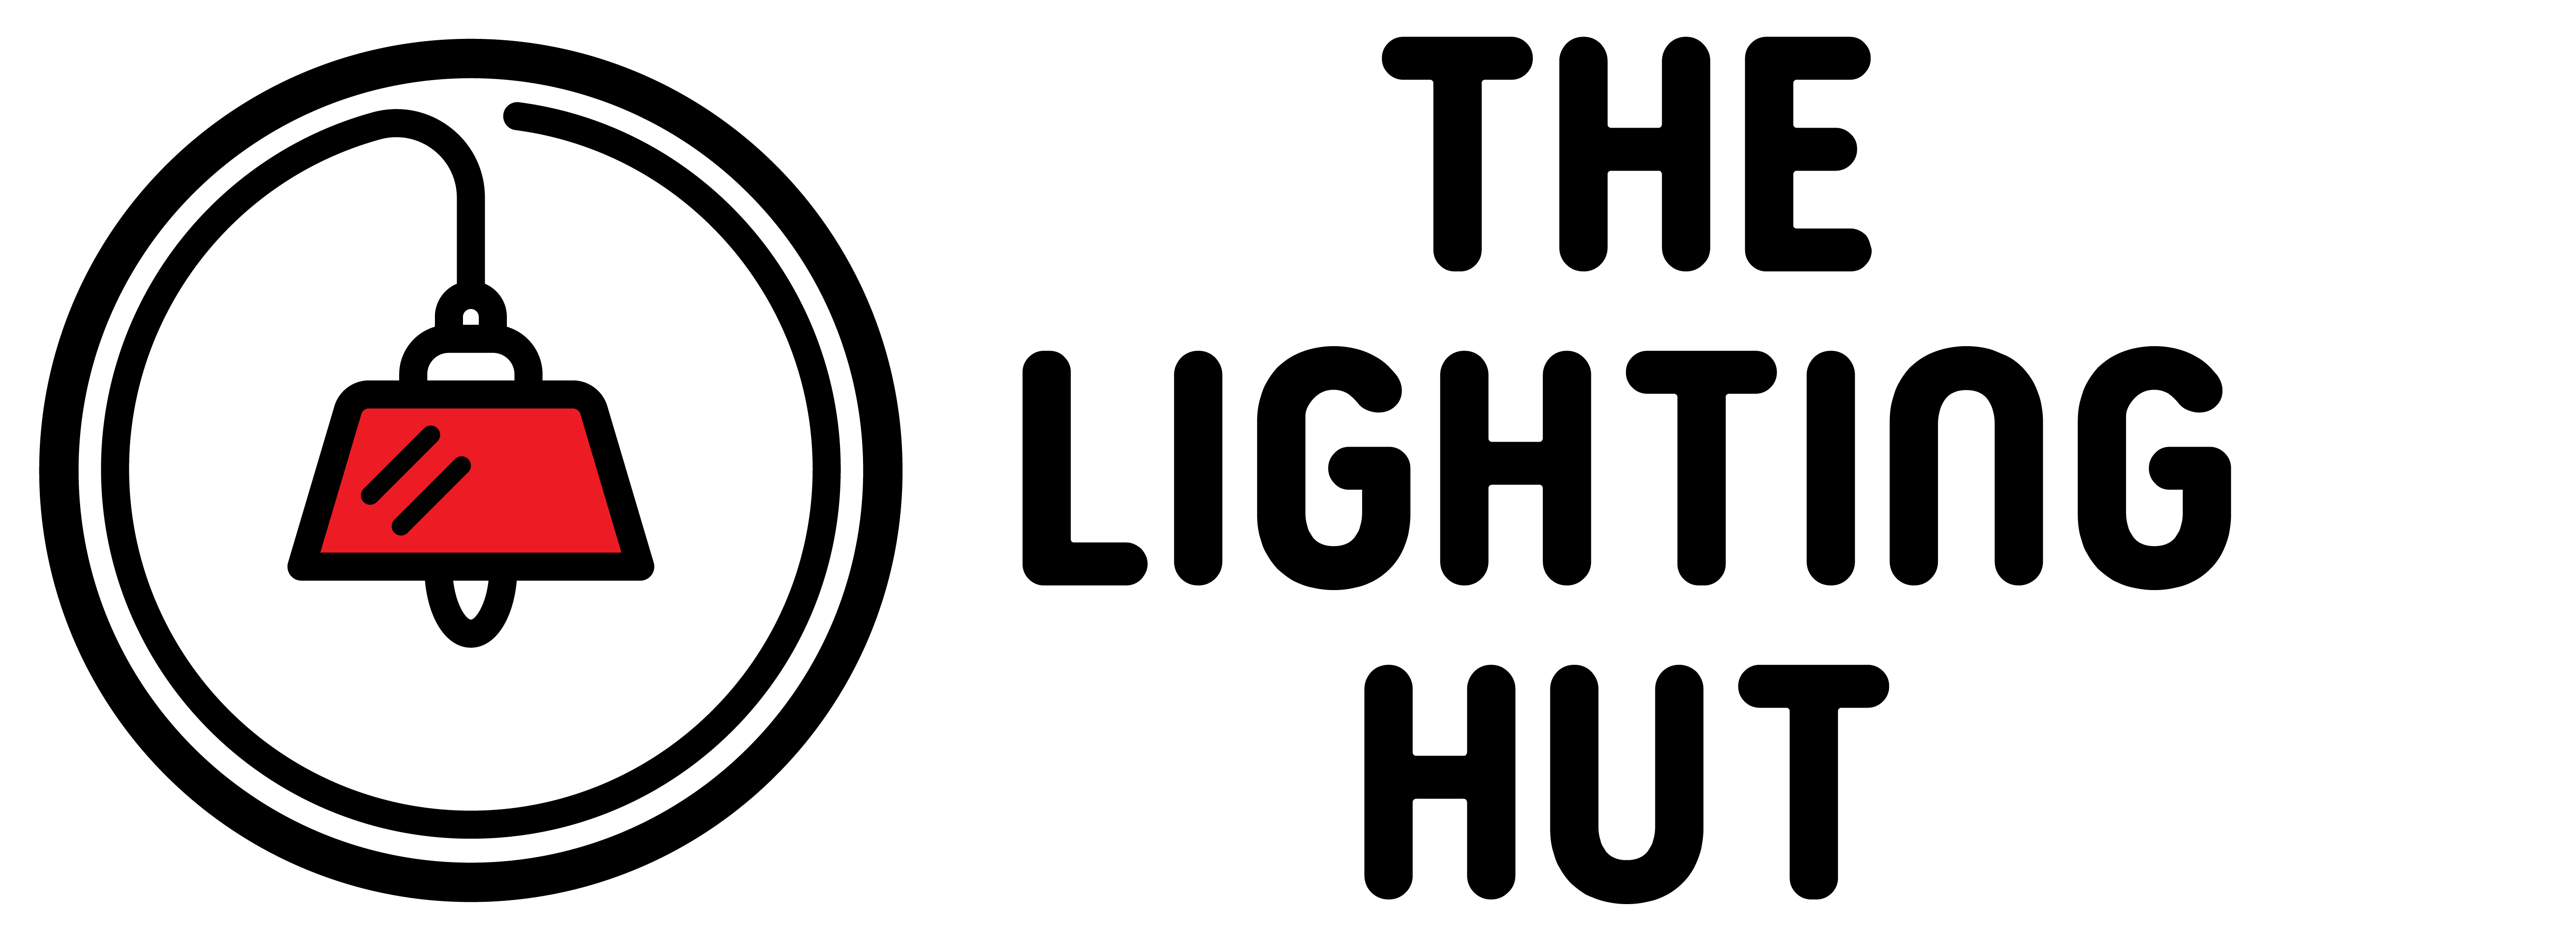 The Lighting Hut, Inc.